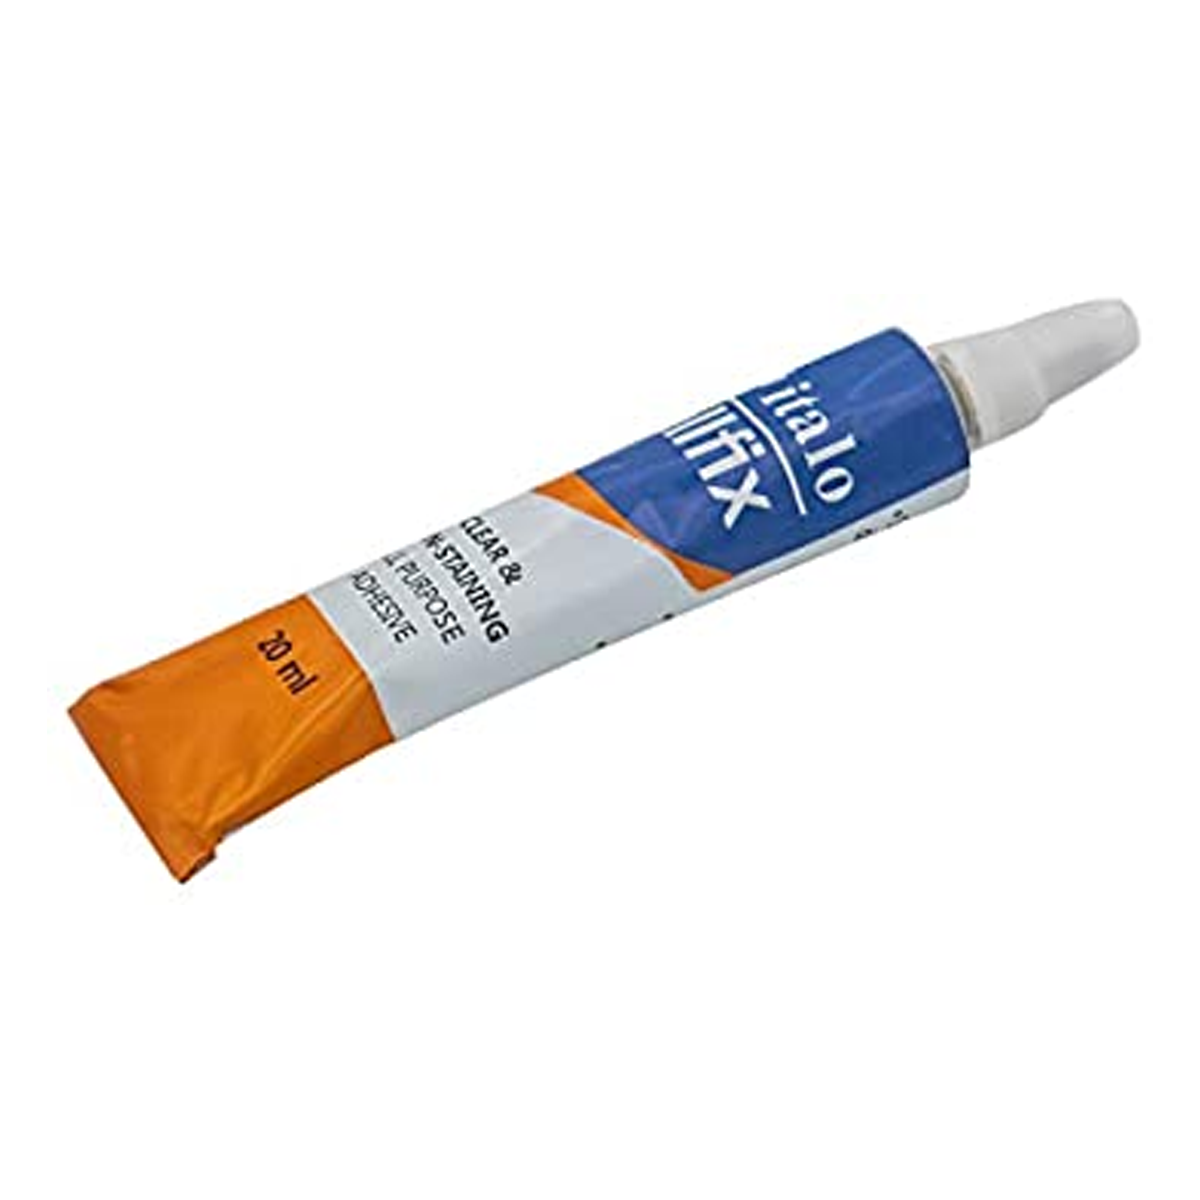 ITALO - allfix Clear & Non Staining all Purpose Adhesive 20 ml